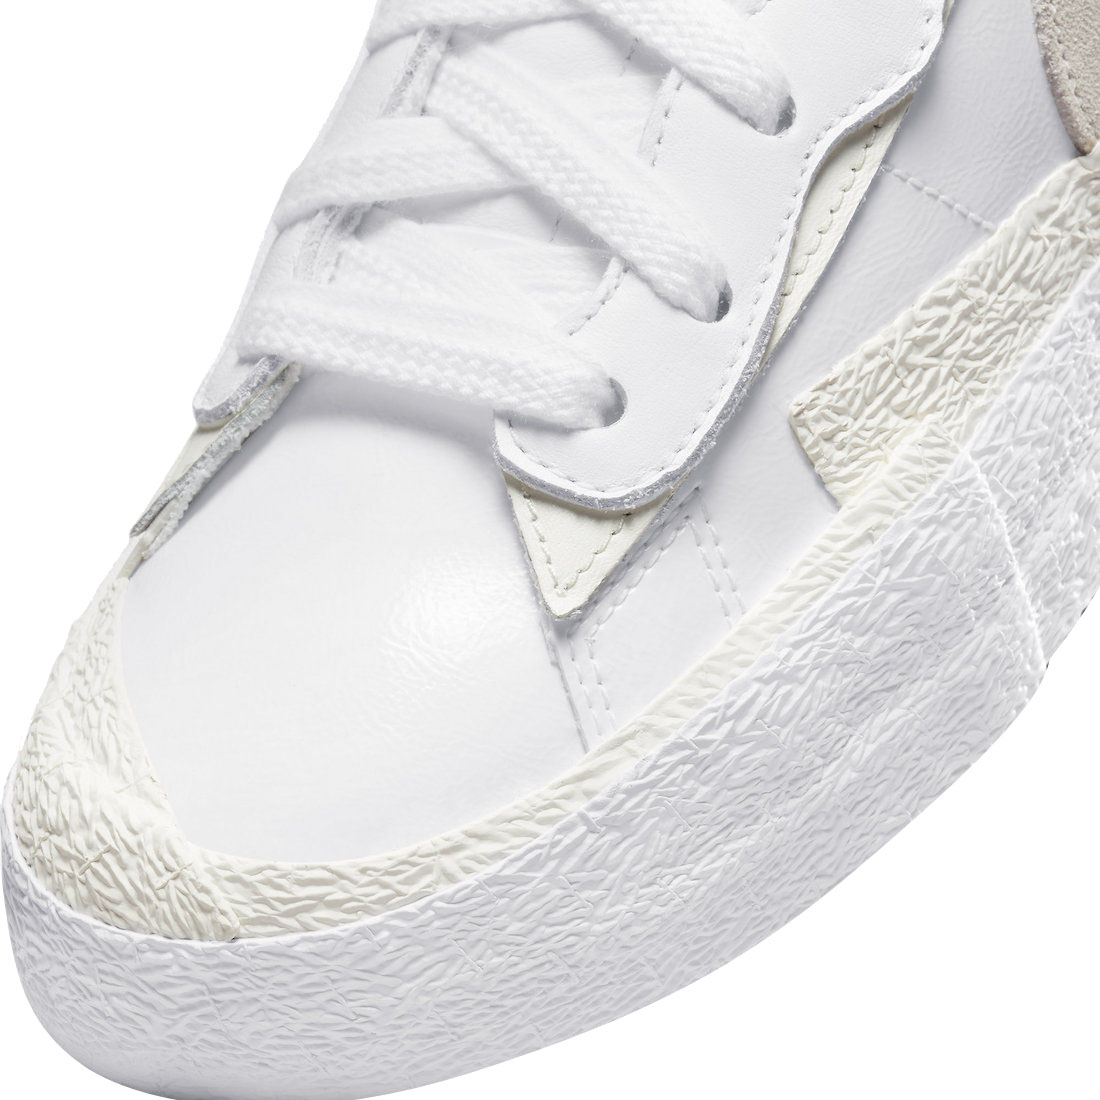 sacai x Nike Blazer Low White Patent DM6443-100